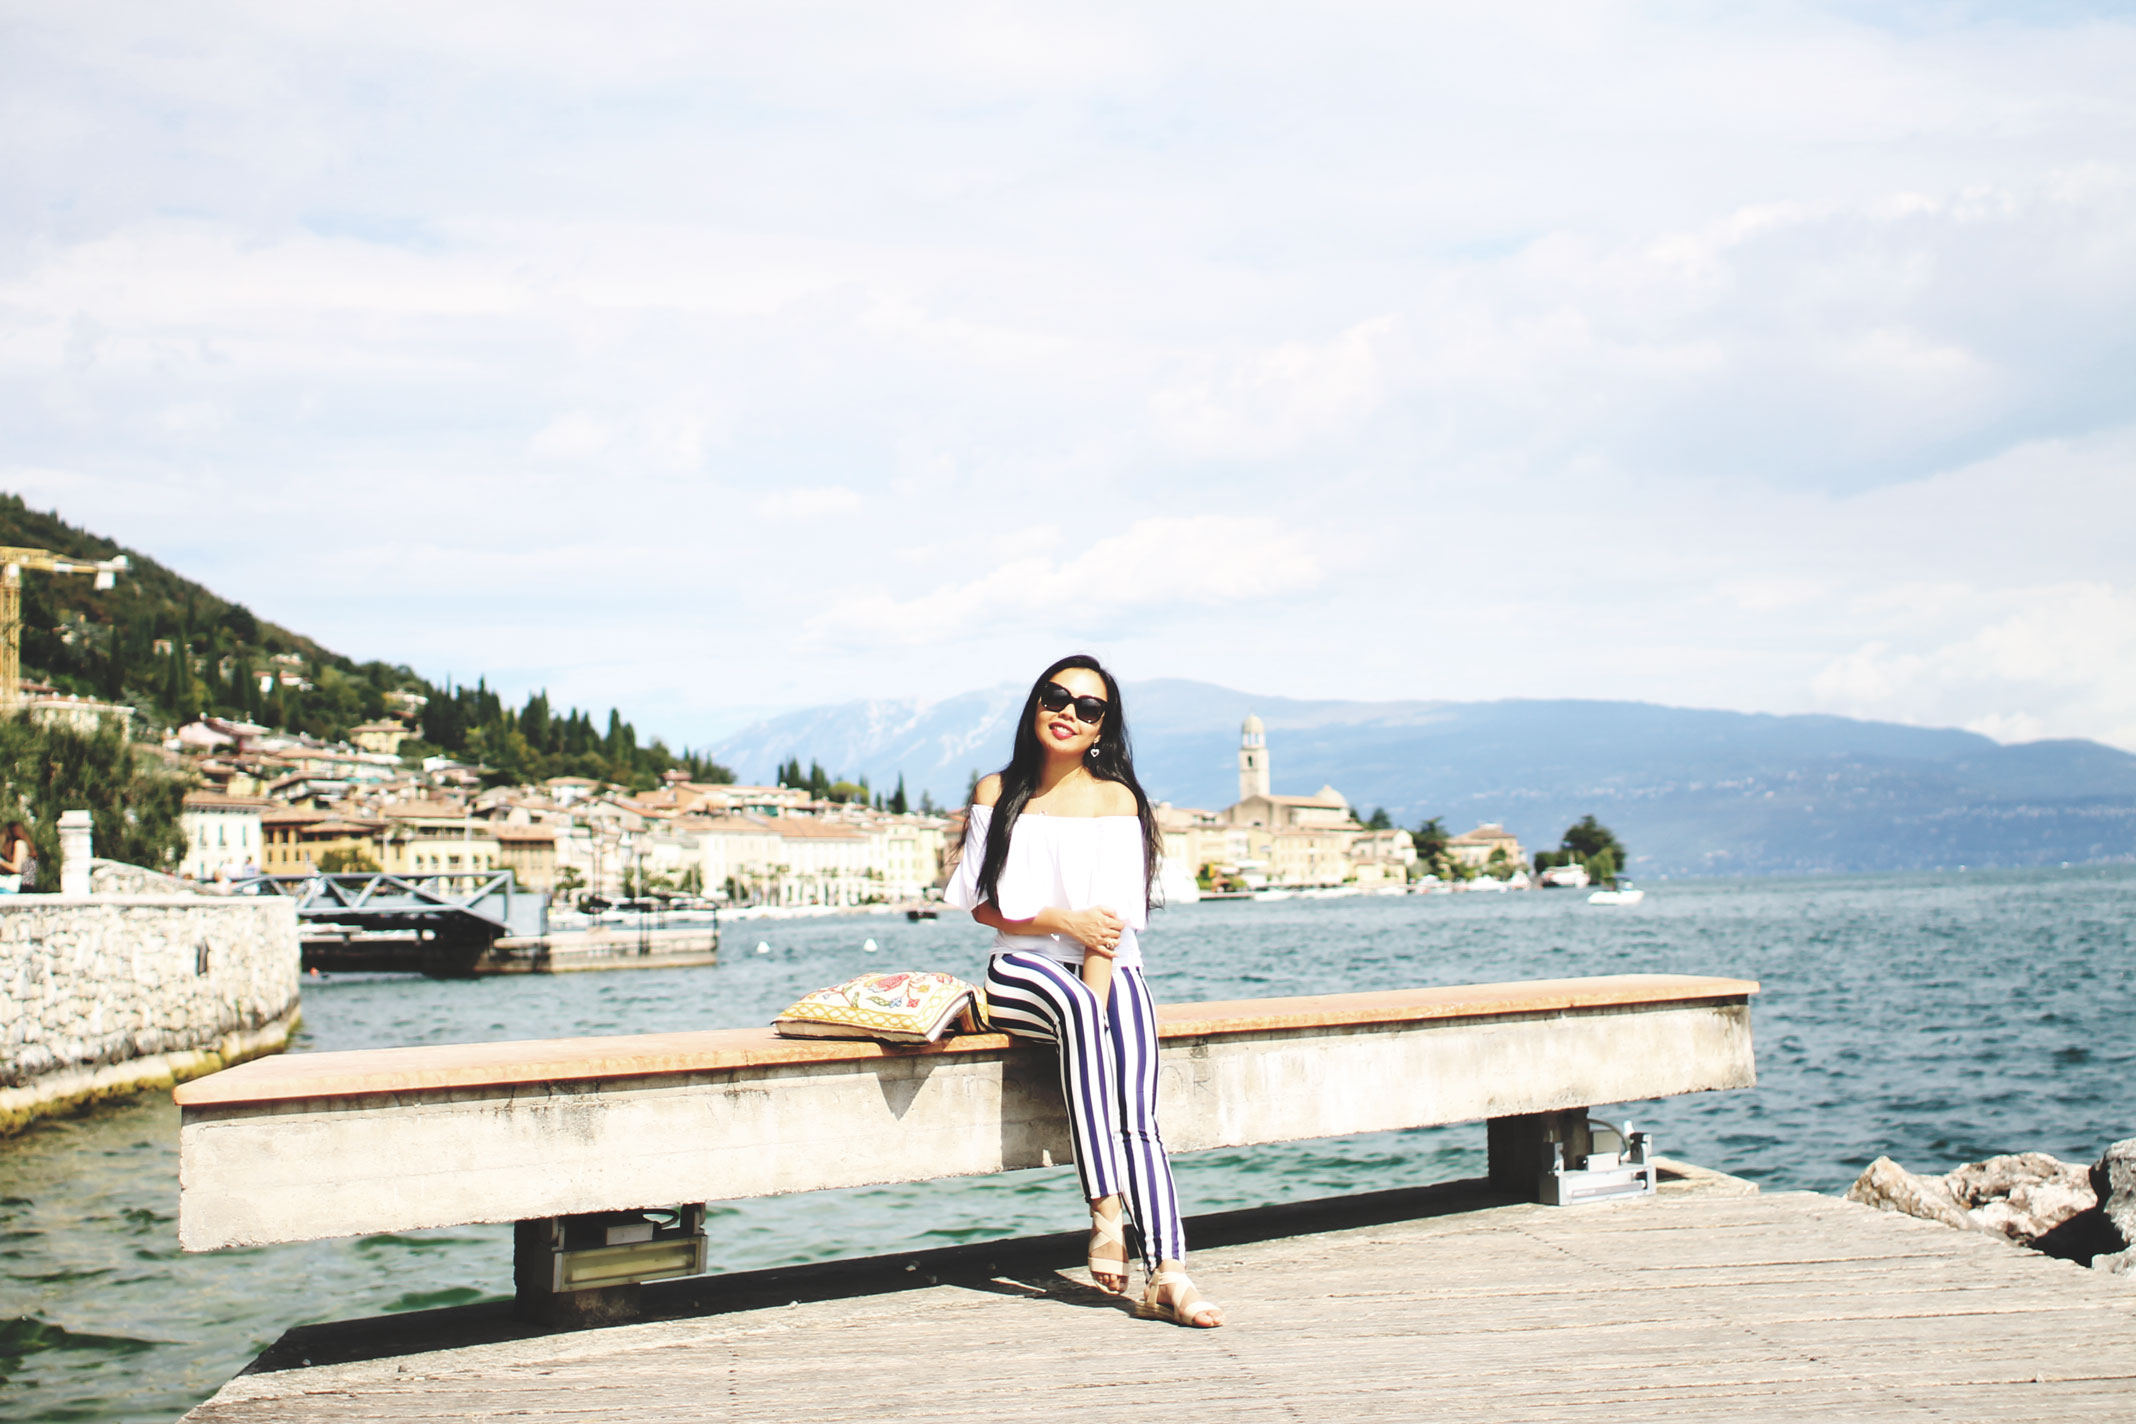 Lake Garda Italy Travel Holidays - Best Travel Blog Sites - Latest Fashion Blog Trends - Travel to Italy - 04